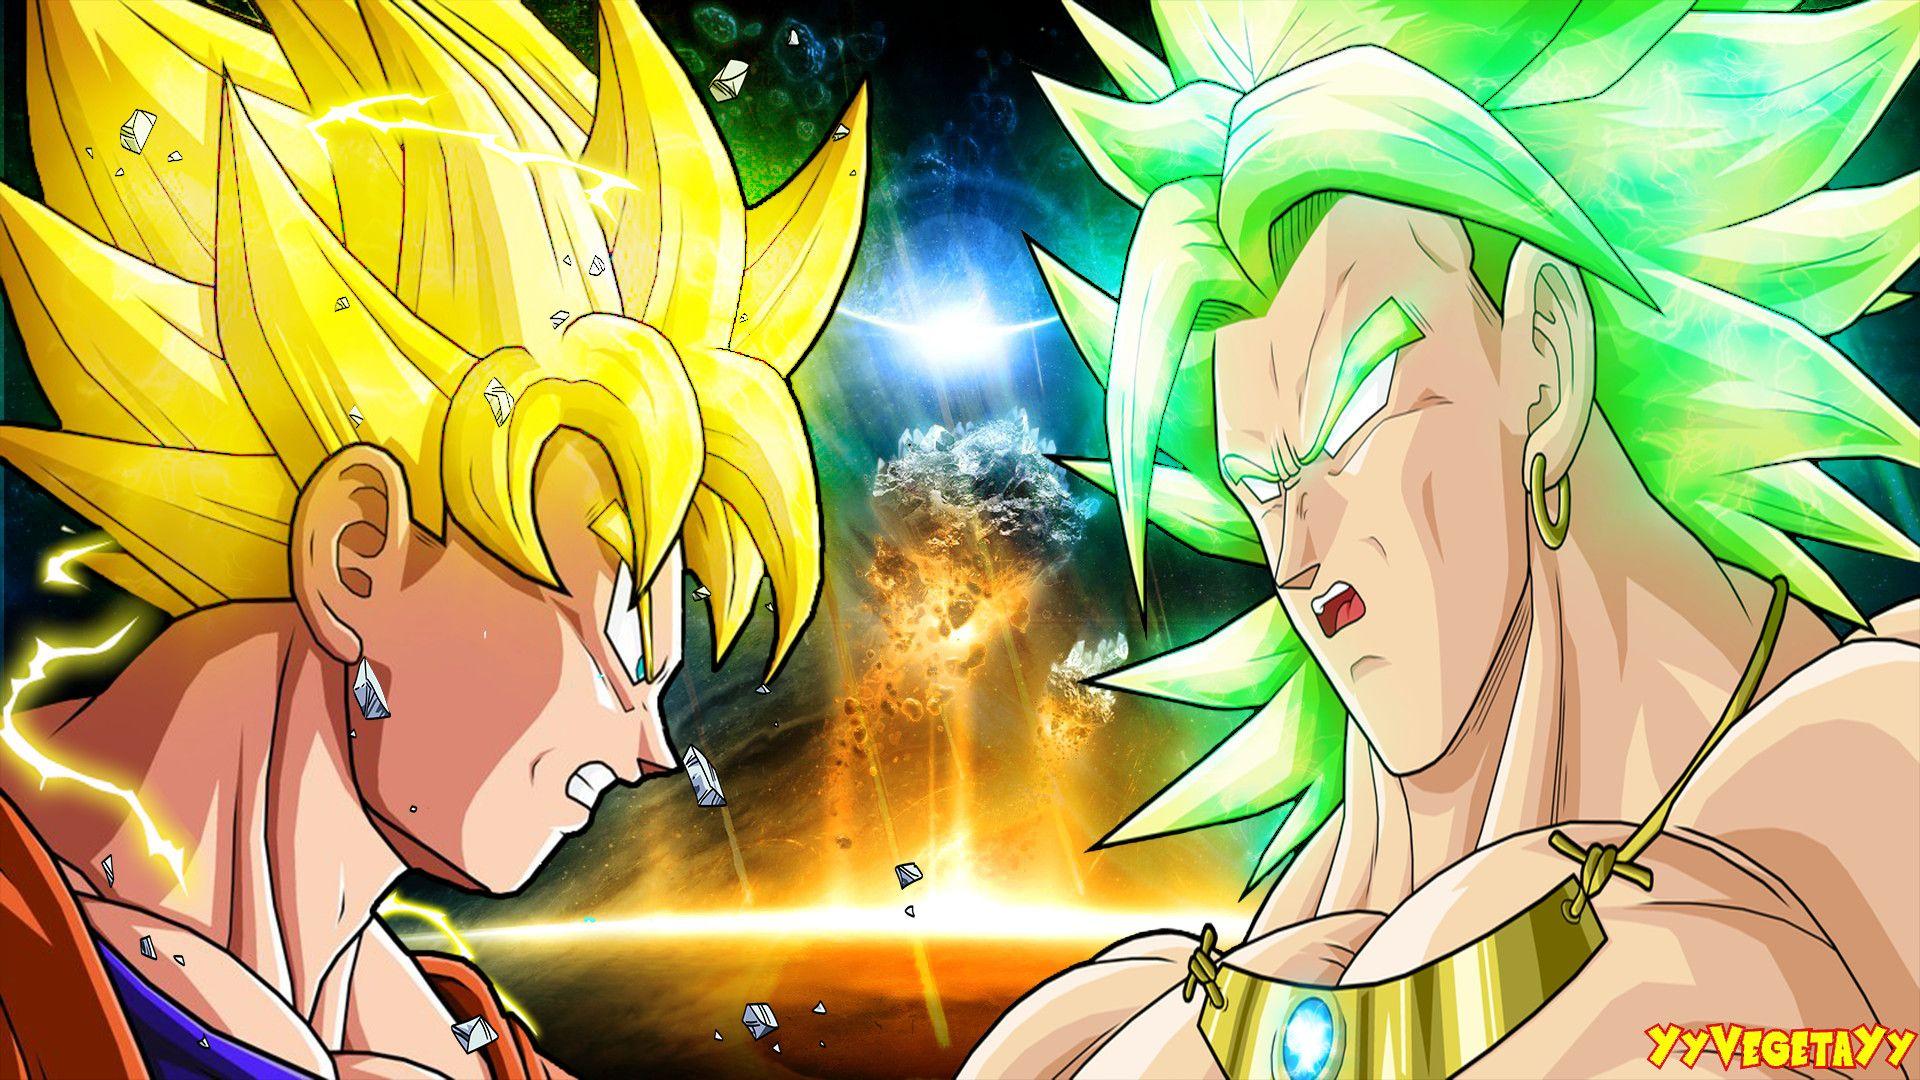  Goku  vs  Broly  Wallpapers  Top Free Goku  vs  Broly  